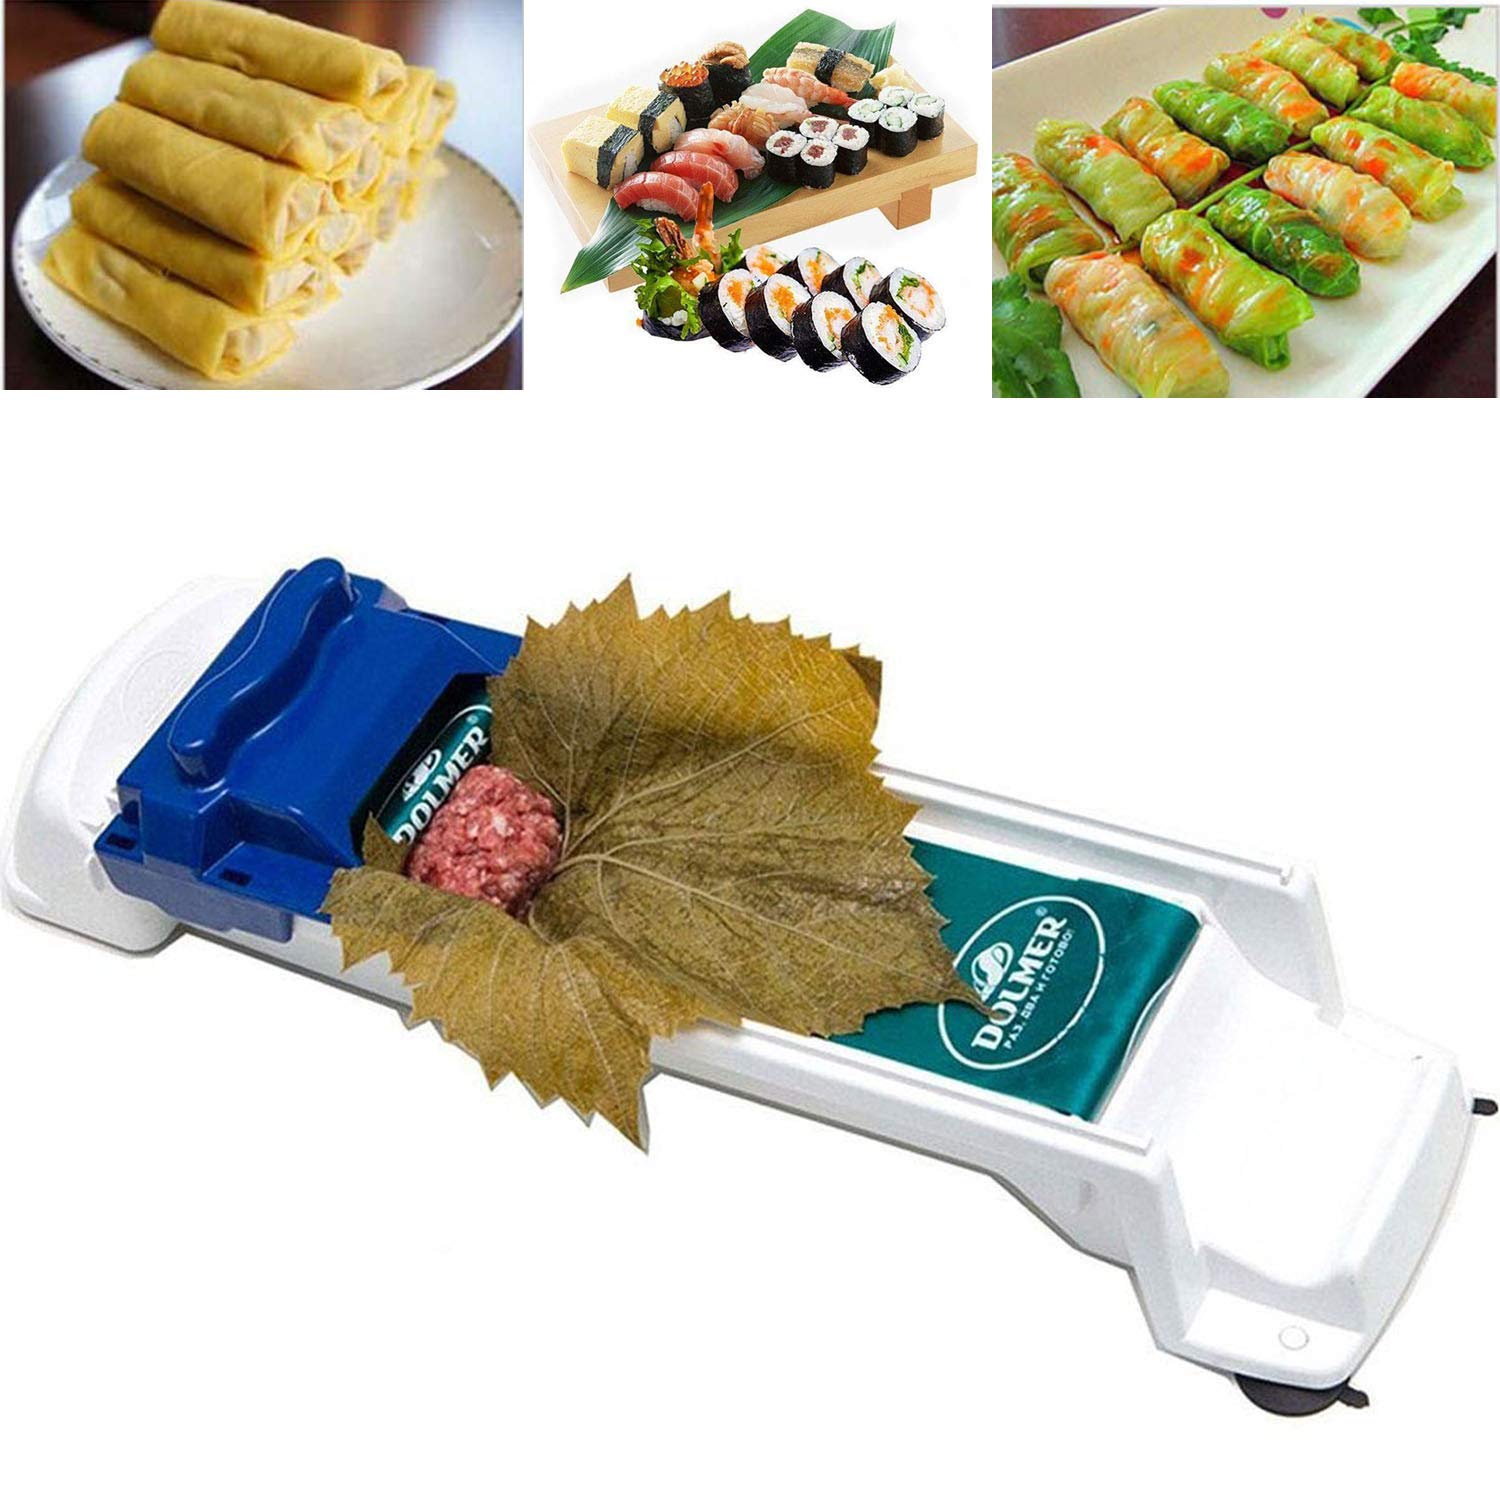 Sushi Roll Machine,DIY Sushi Maker Roller,Beginners